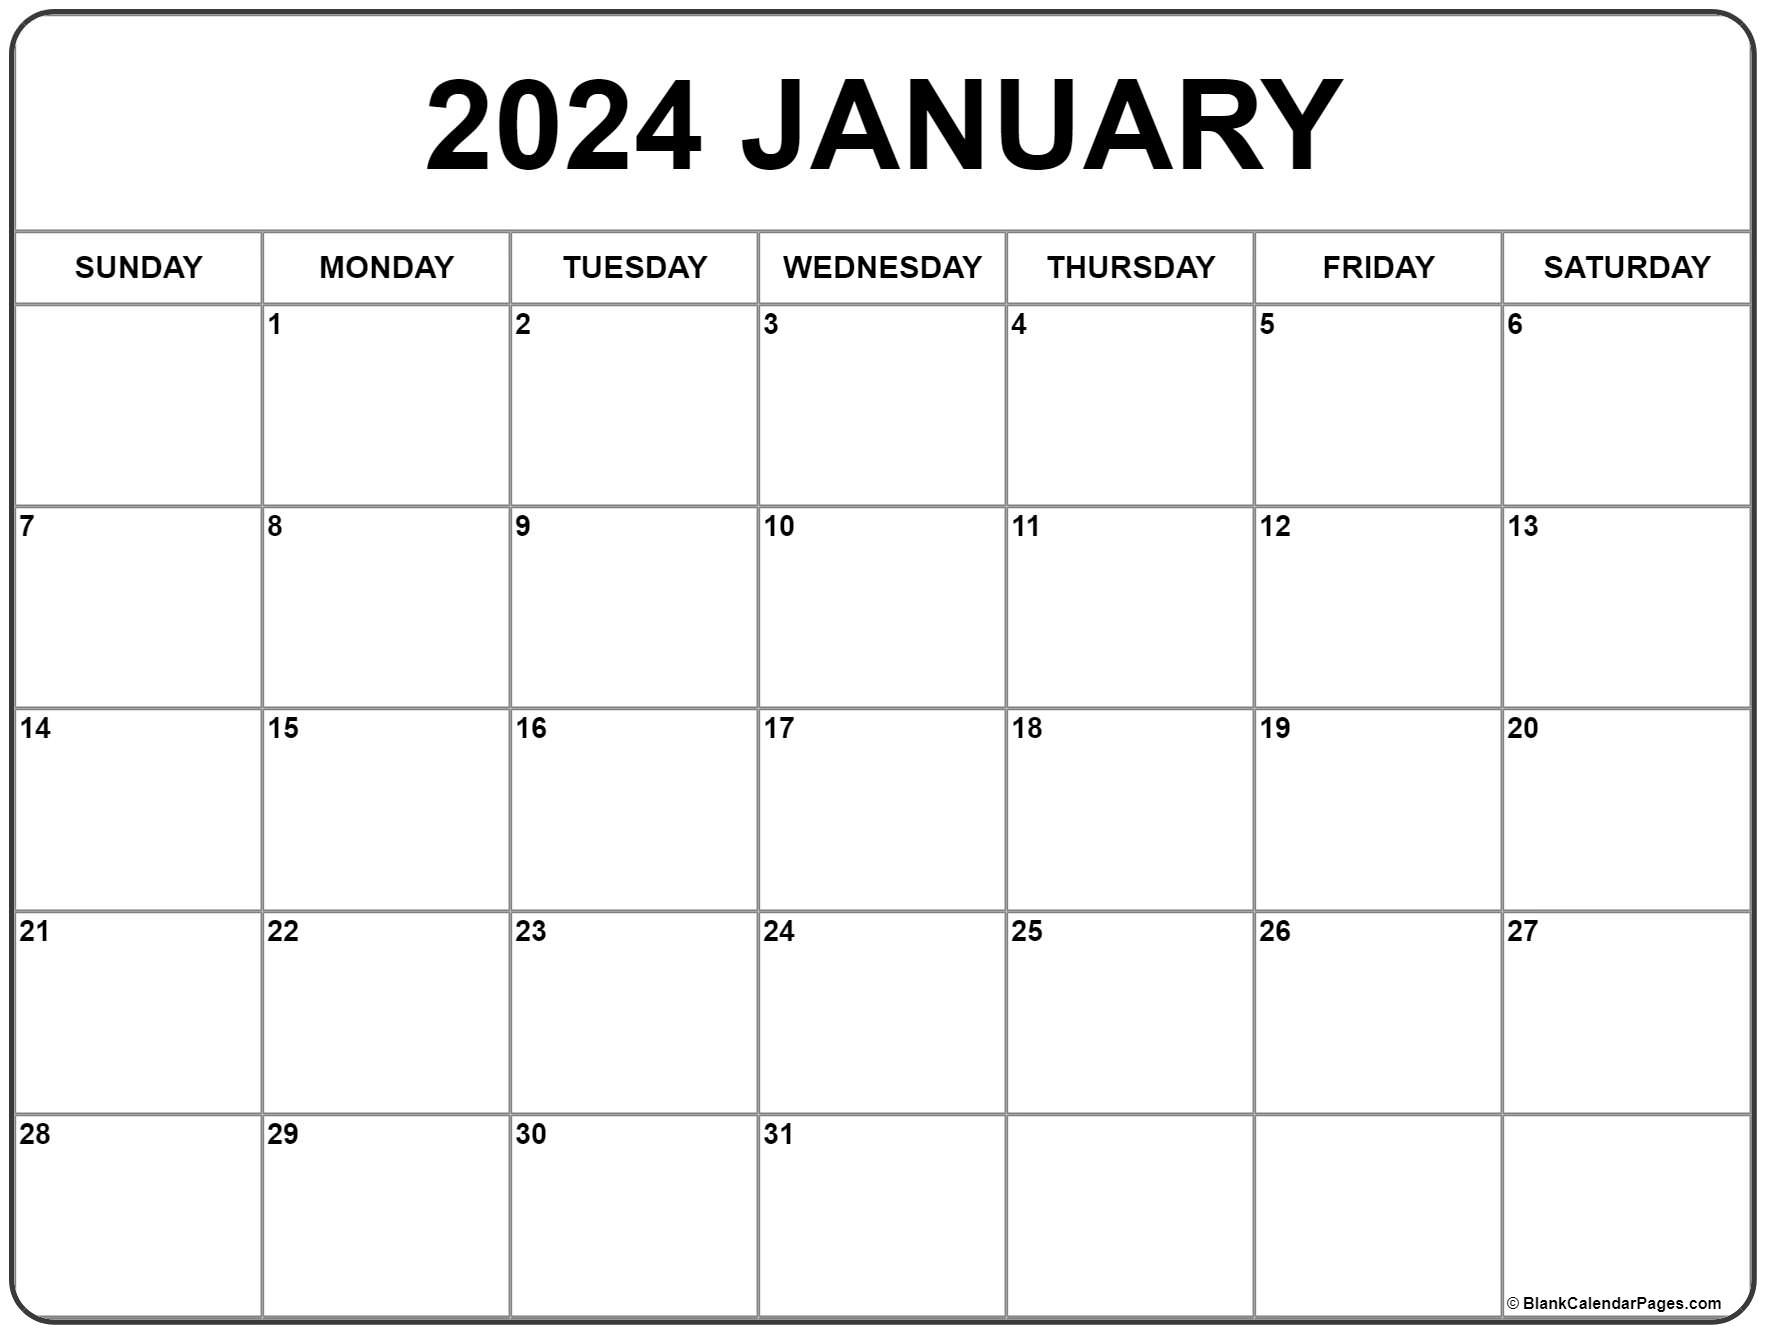 January 2024 Calendar | Free Printable Calendar for January 2024 Calendar Printable Free